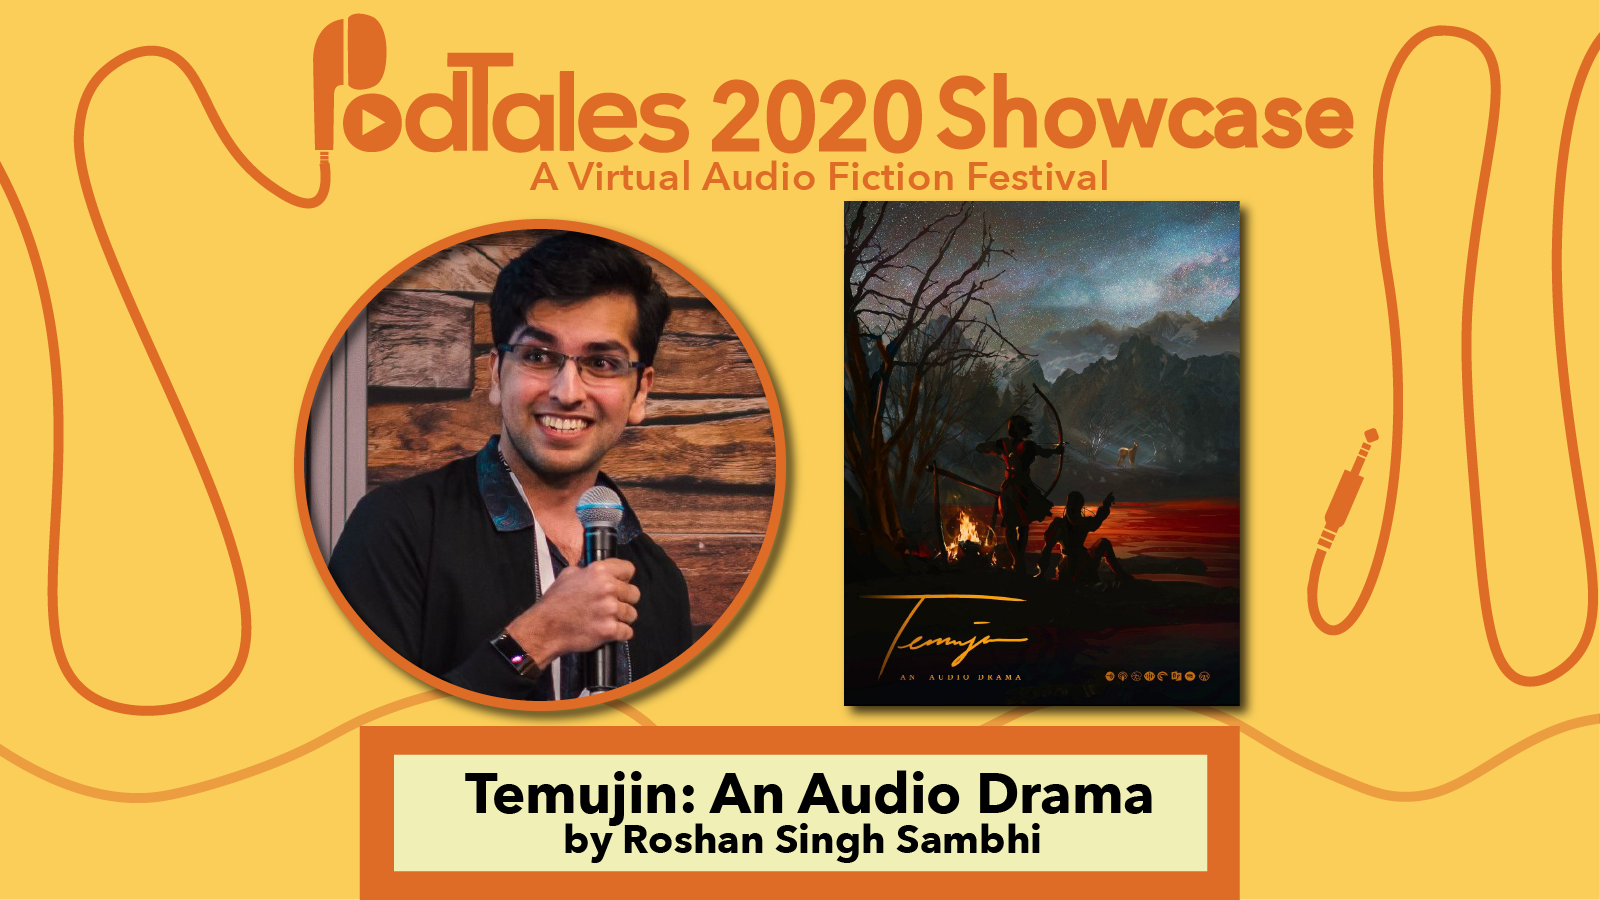 PodTales 2020 Showcase: A Virtual Audio Fiction Festival, Photo of Roshan Singh Sambhi, Photo of Show Art for Temujin: An Audio Drama, Text Reading "Temujin: An Audio Drama by Roshan Singh Sambhi"